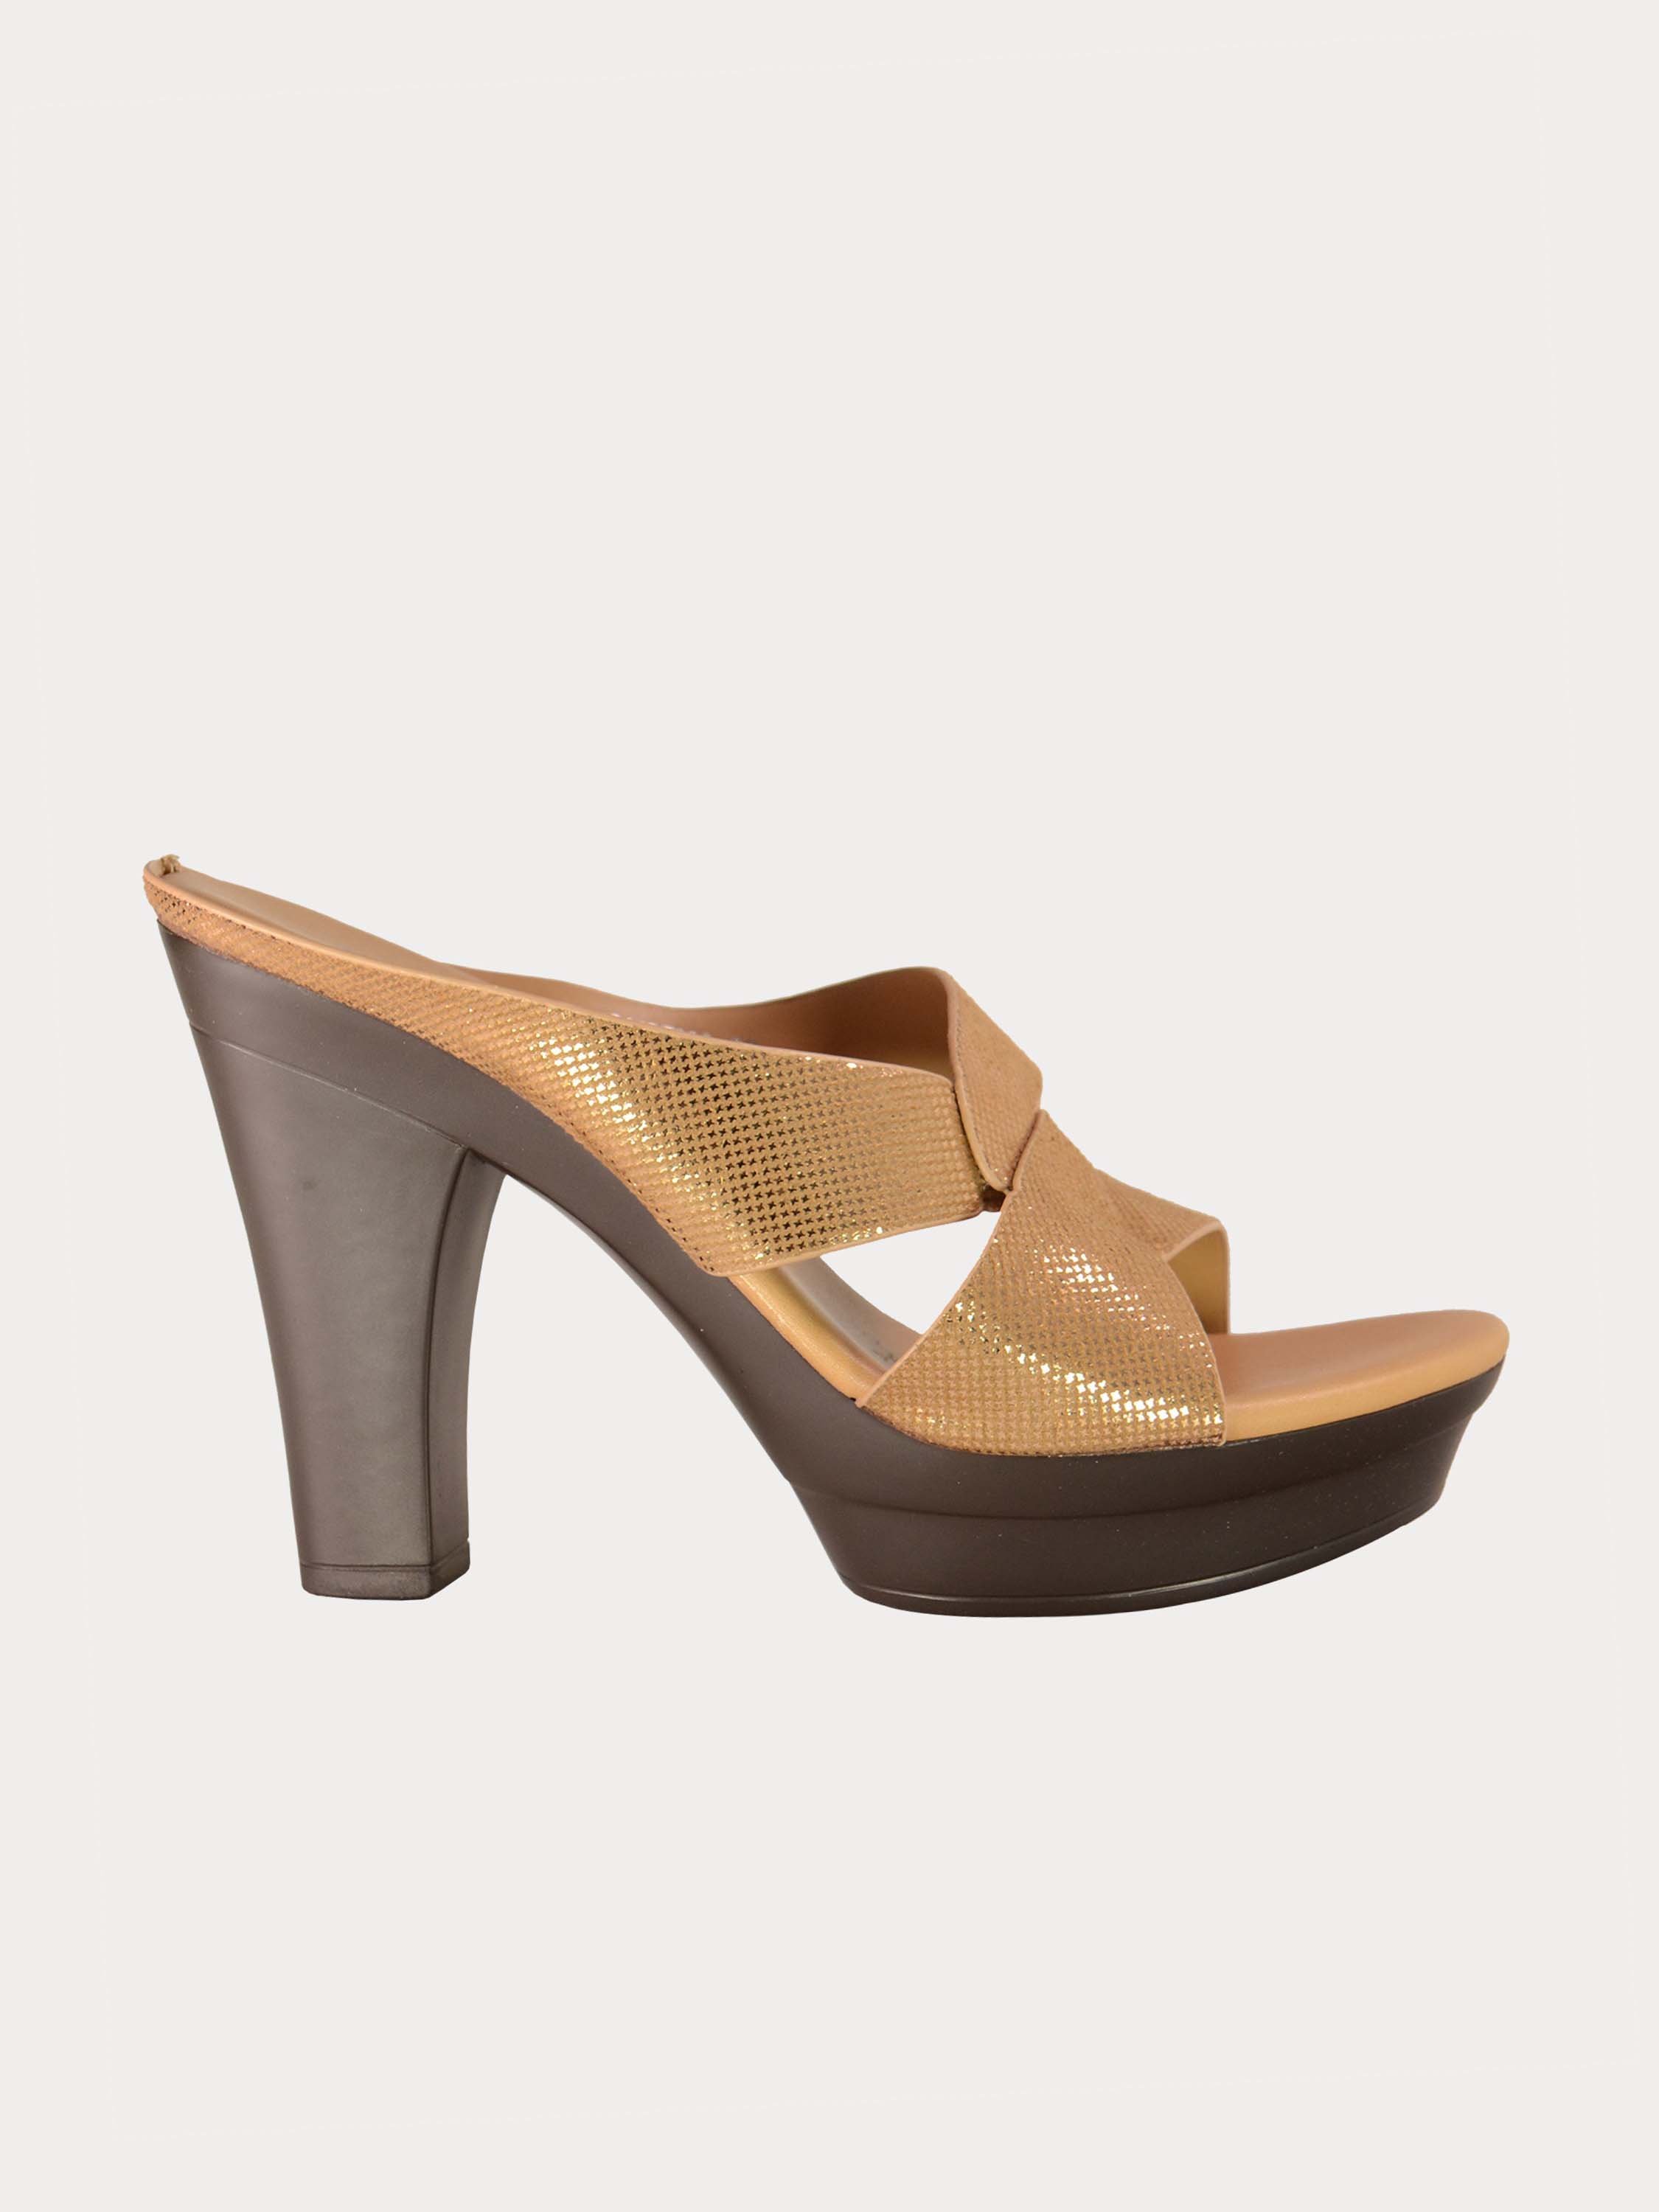 Michelle Morgan 914RJ636 Women's Glitzy Heeled Sandals #color_Brown